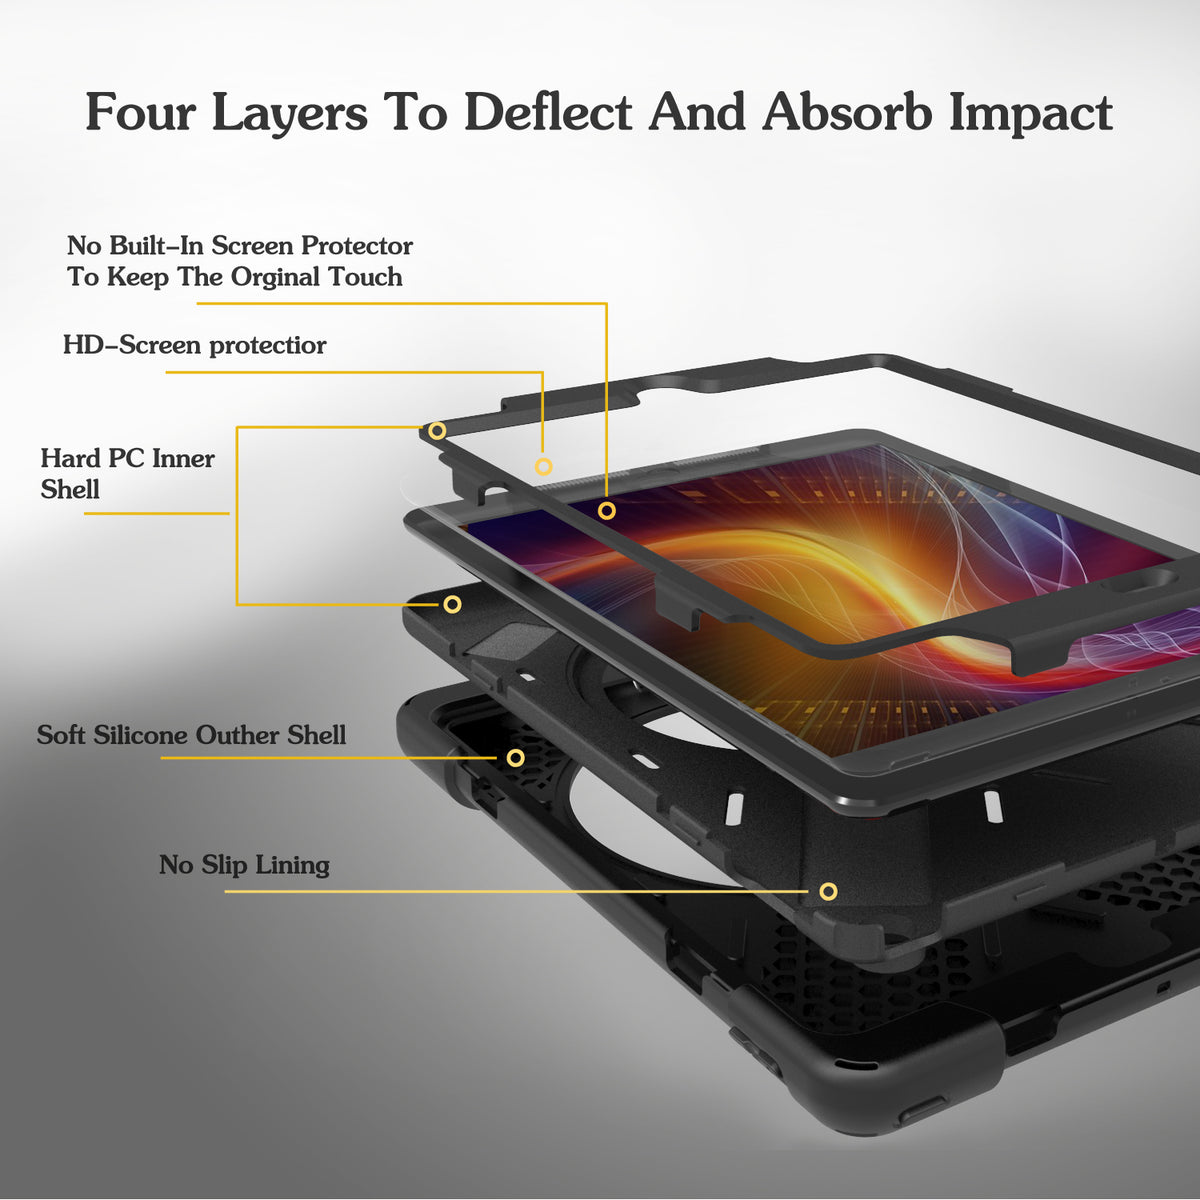 Ipad case with 360 degree rotary crutch